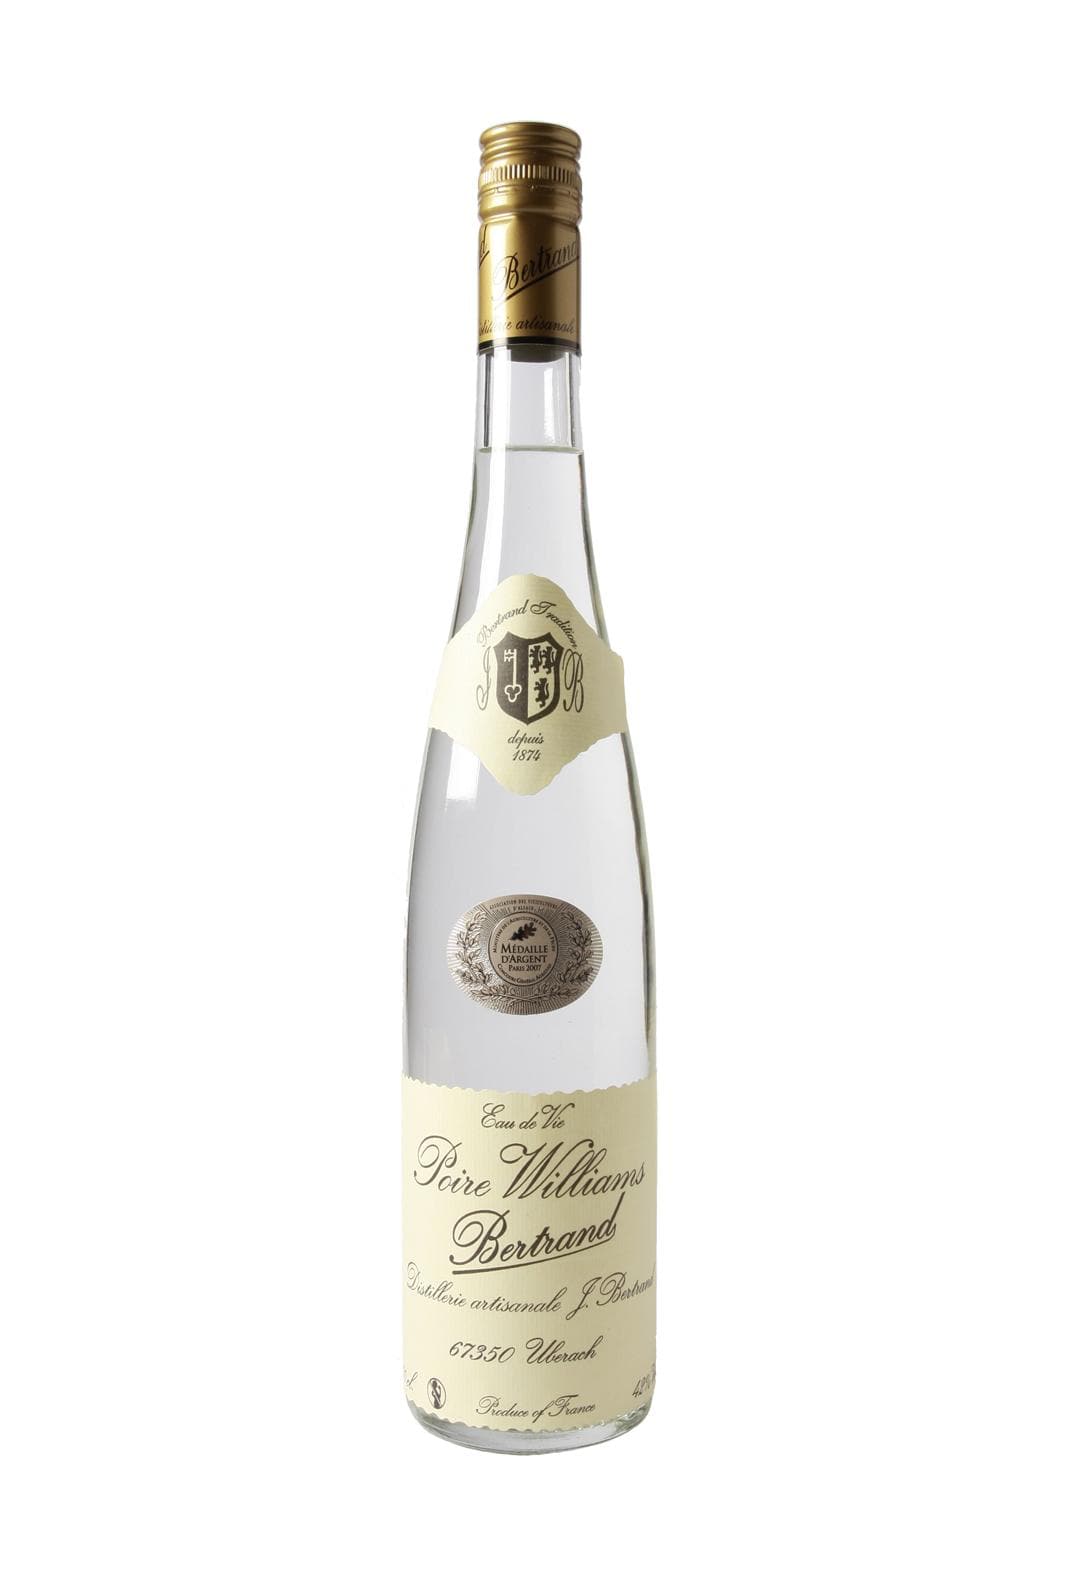 Bertrand Eau de Vie de Poire William (Williams Pear) 42% 700ml | Liquor & Spirits | Shop online at Spirits of France